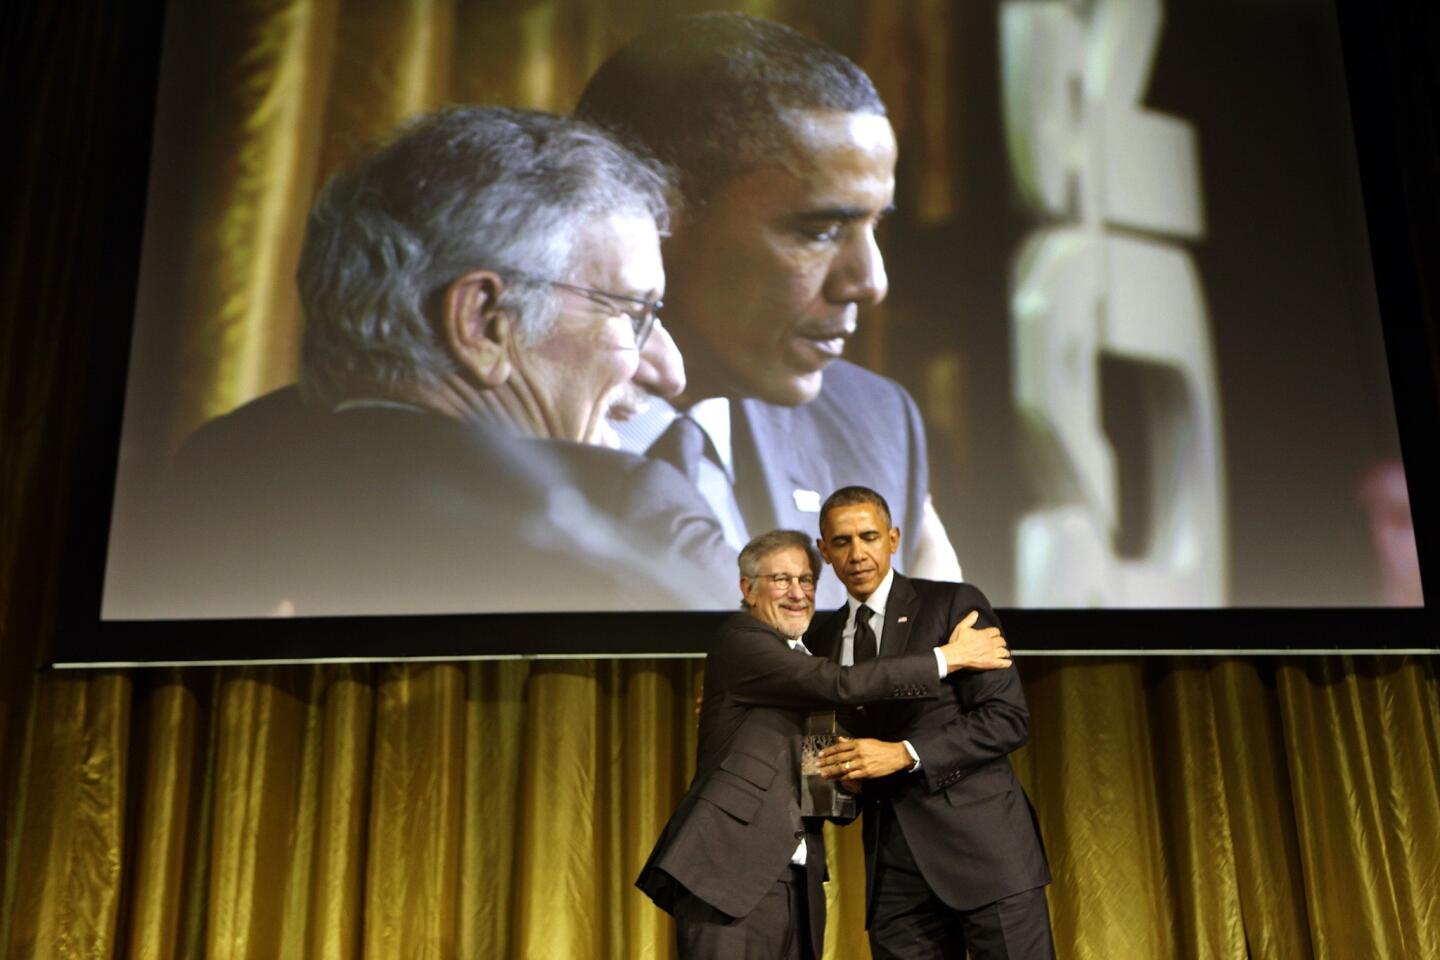 President Obama with Steven Spielberg